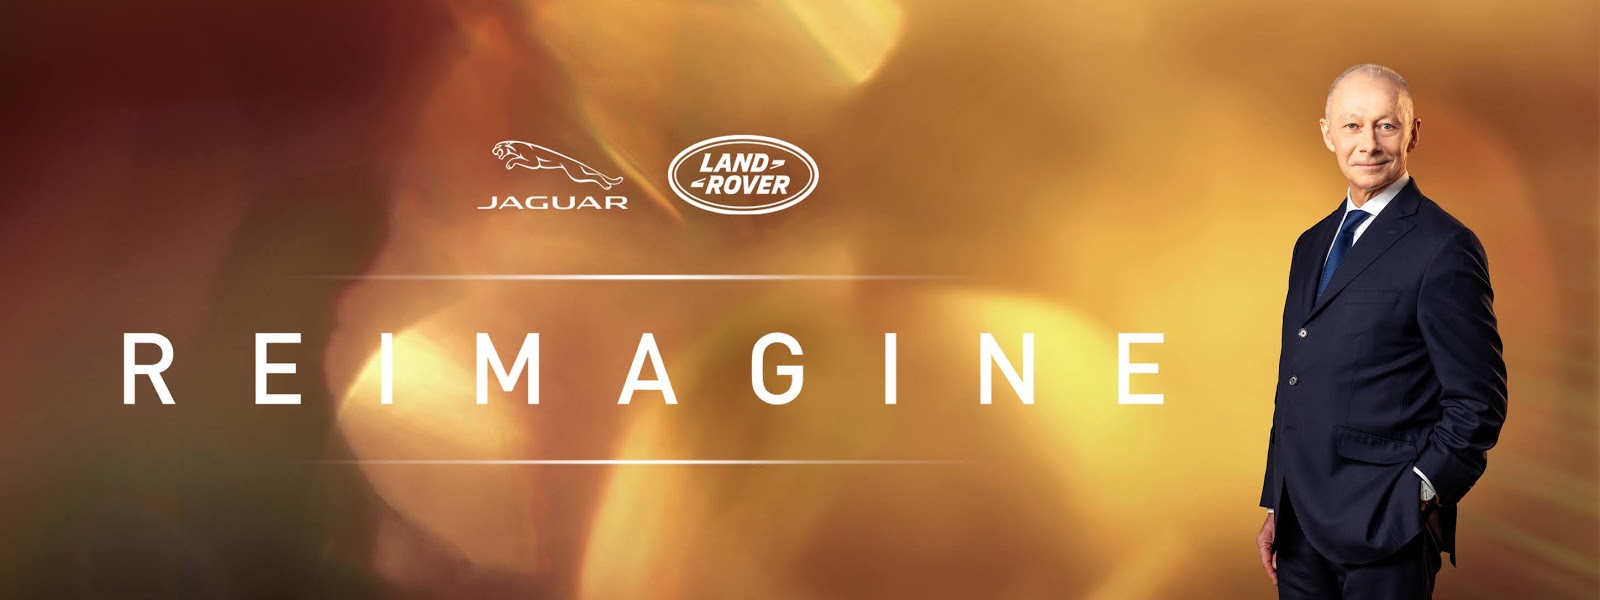 Reimagine2Bstrategy Απο το 2030 ολα τα Jaguar Land Rover θα ειναι ηλεκτρικά!